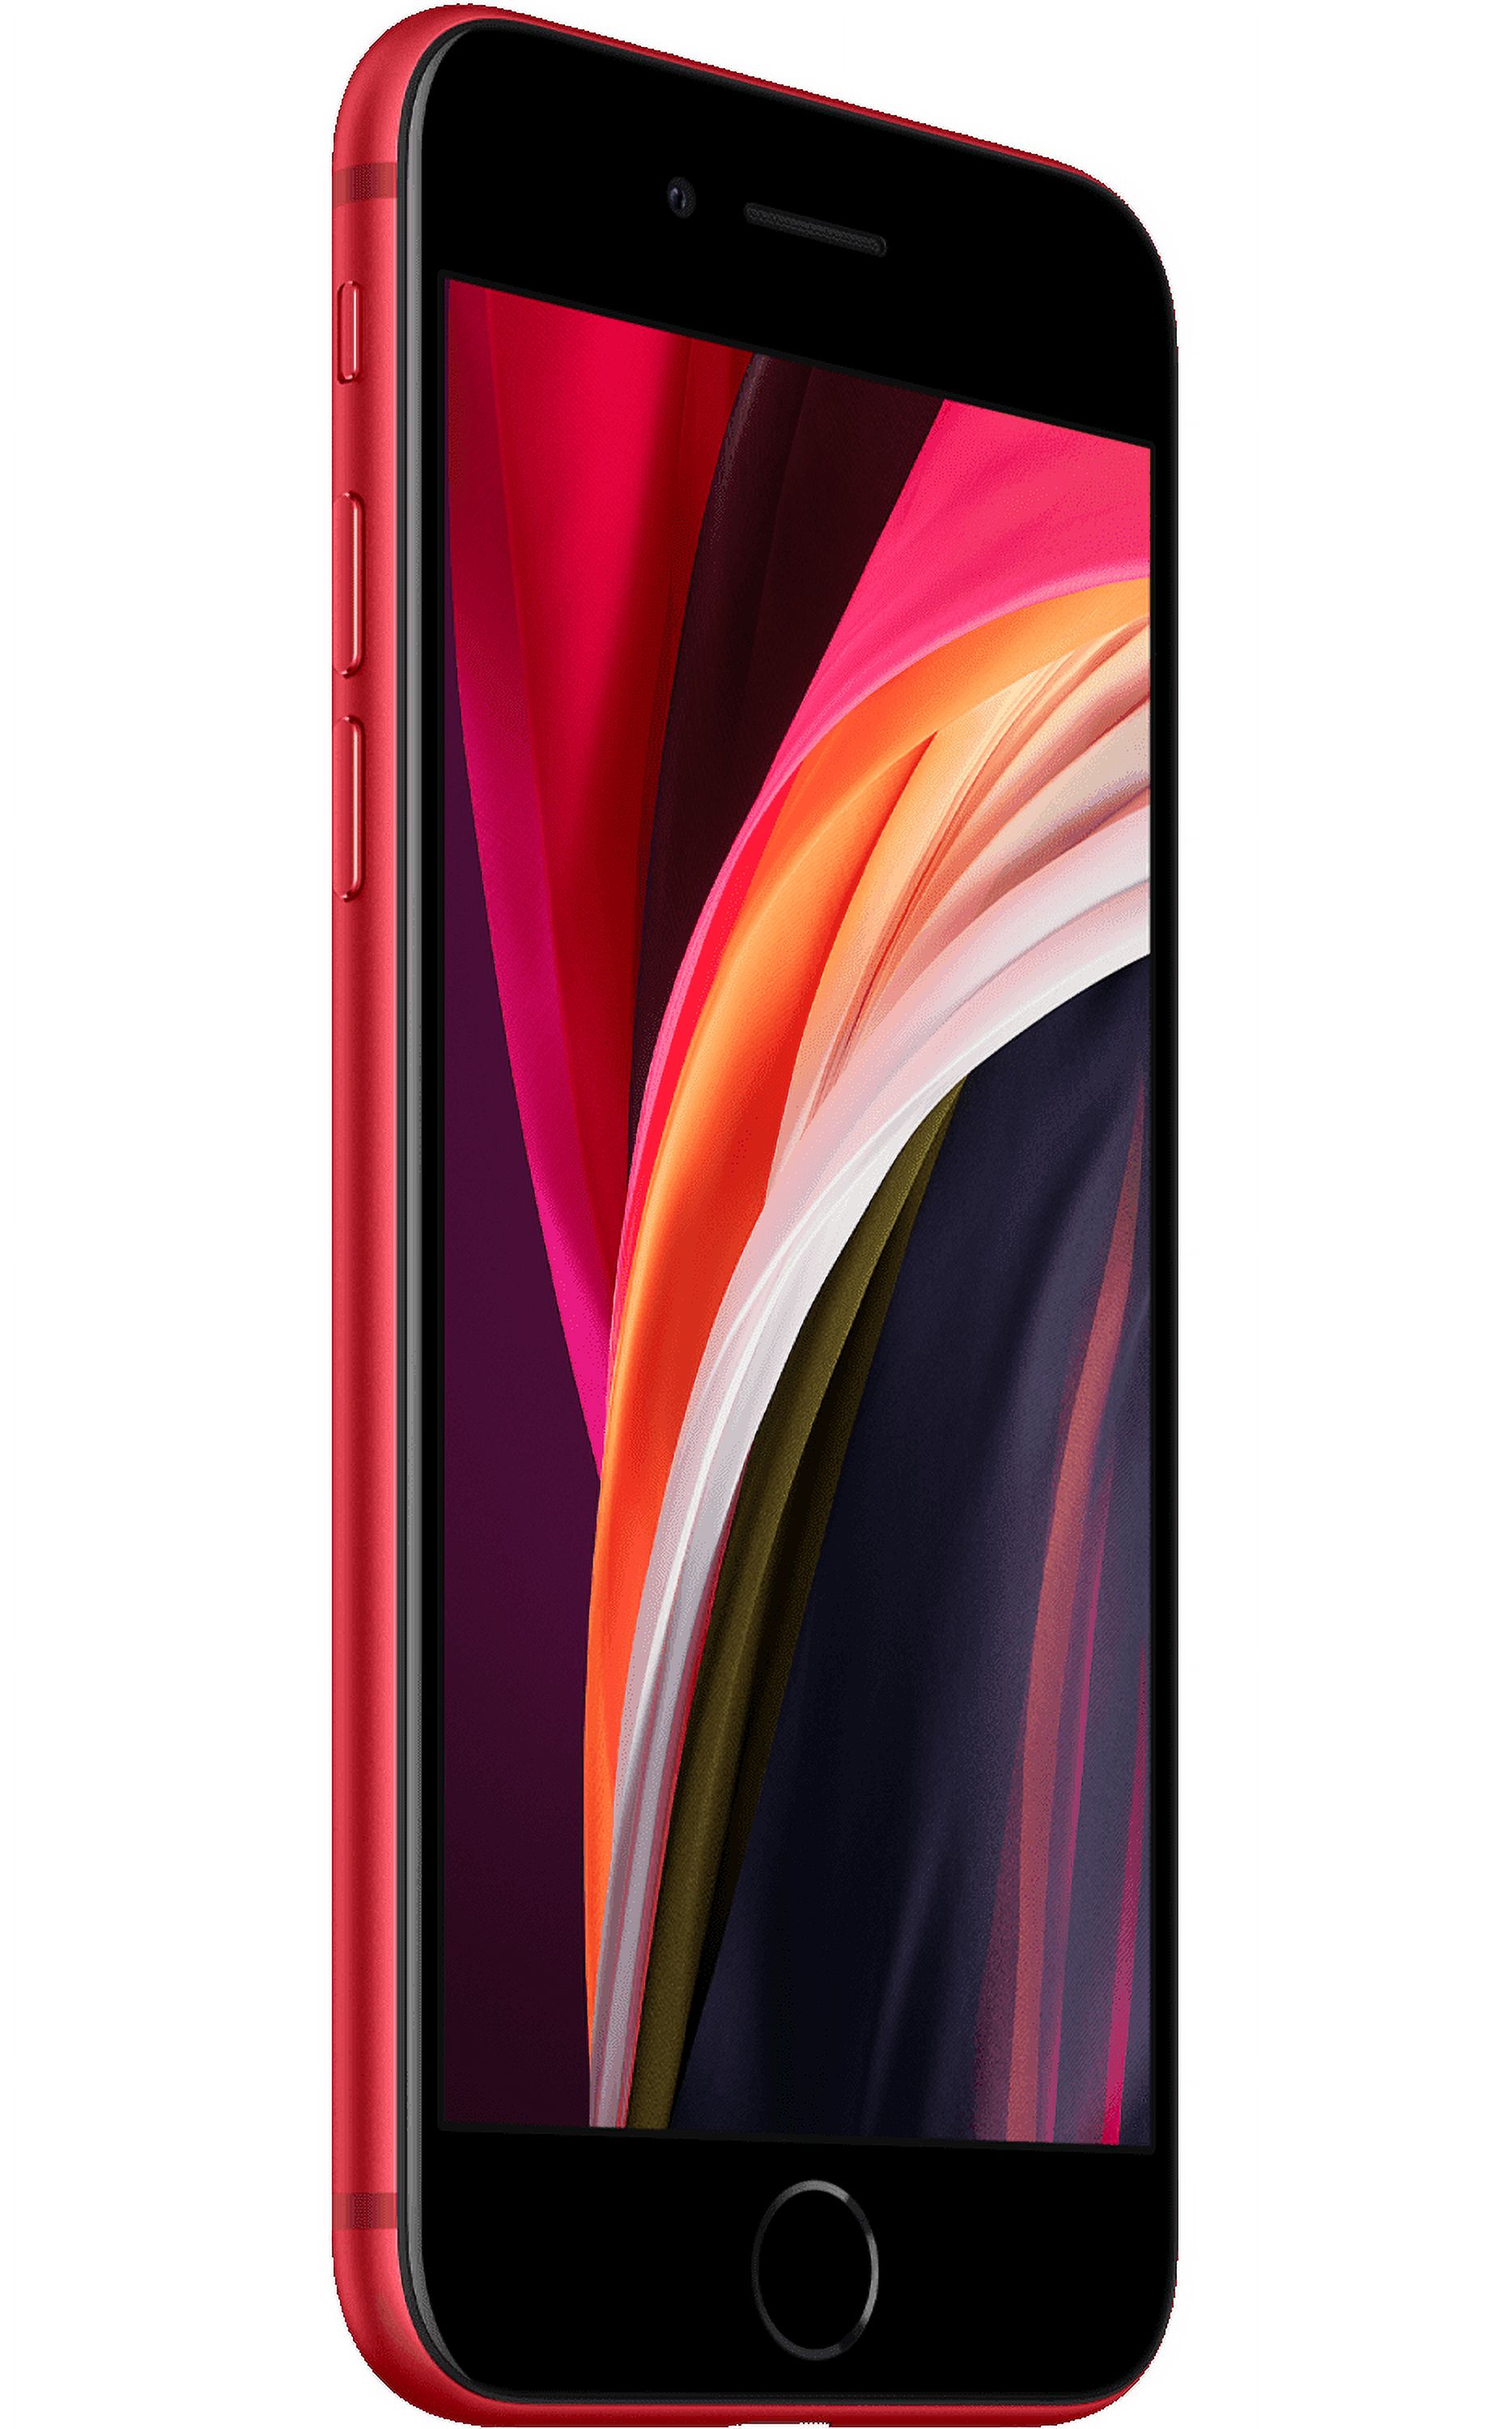 Apple iPhone SE (2020) 128GB GSM/CDMA Fully Unlocked Phone - Red (Grade B Used) - image 4 of 4